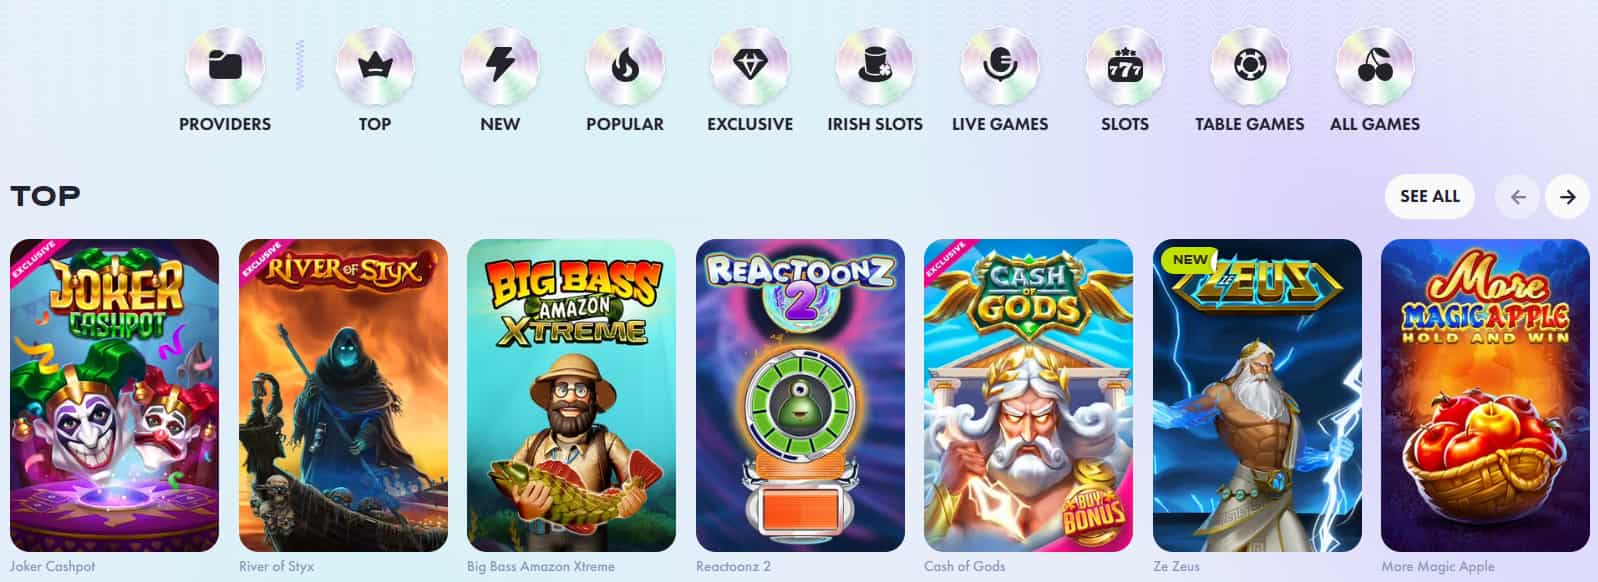 jackpot frenzy casino games